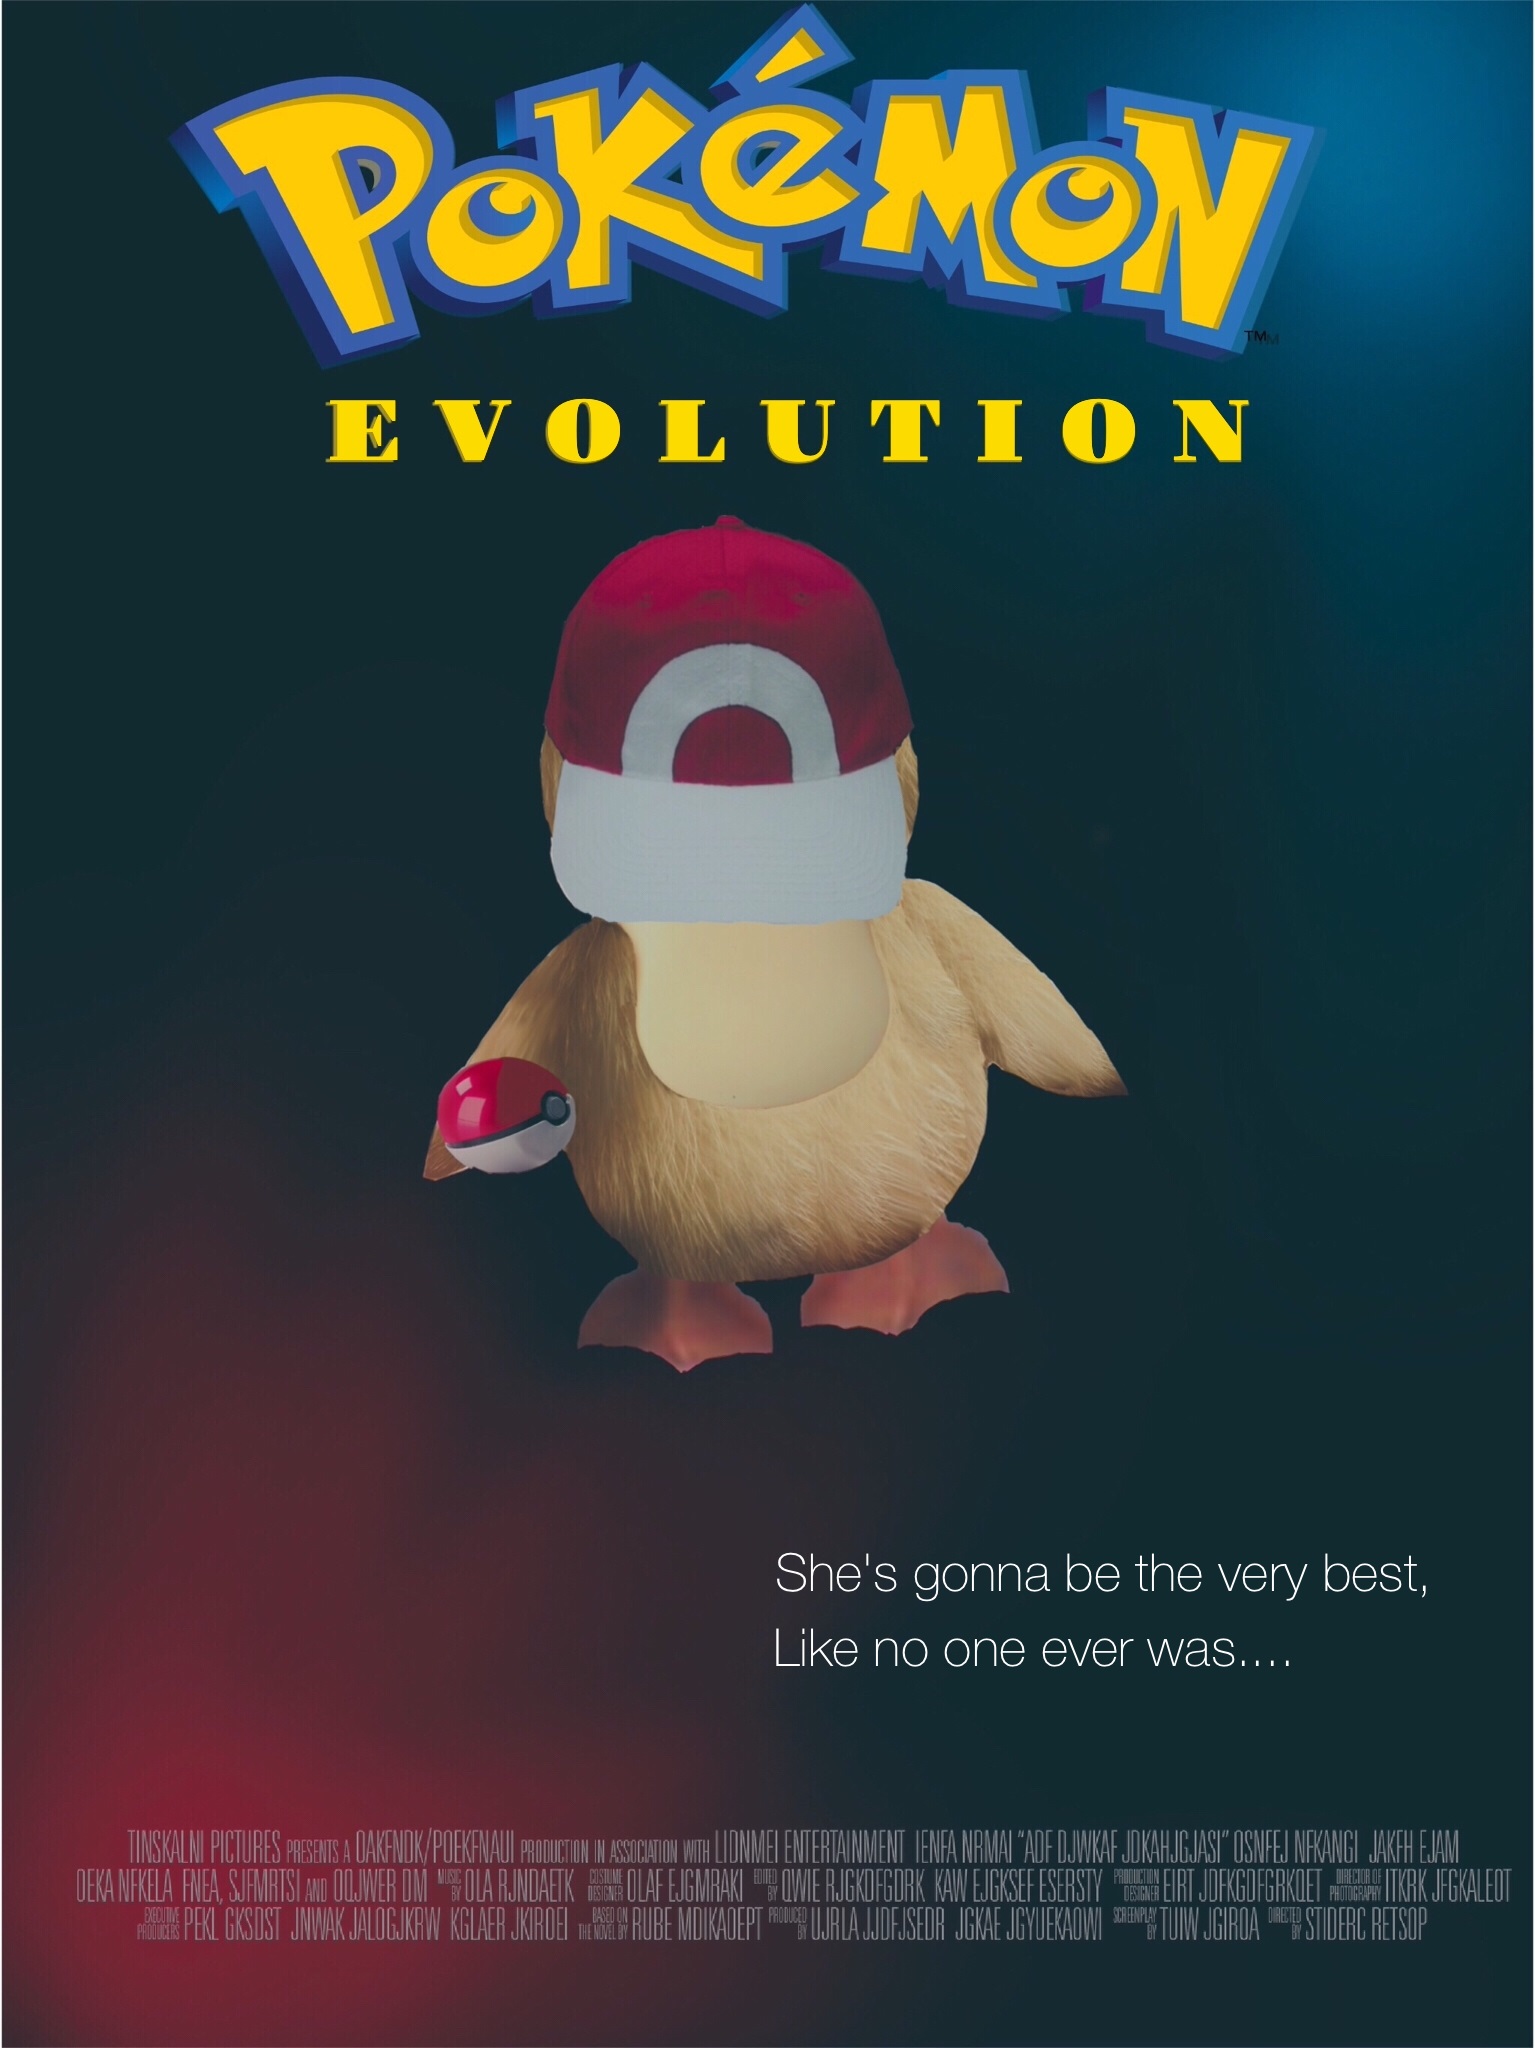 Episode 31 - Pokemon Evolution